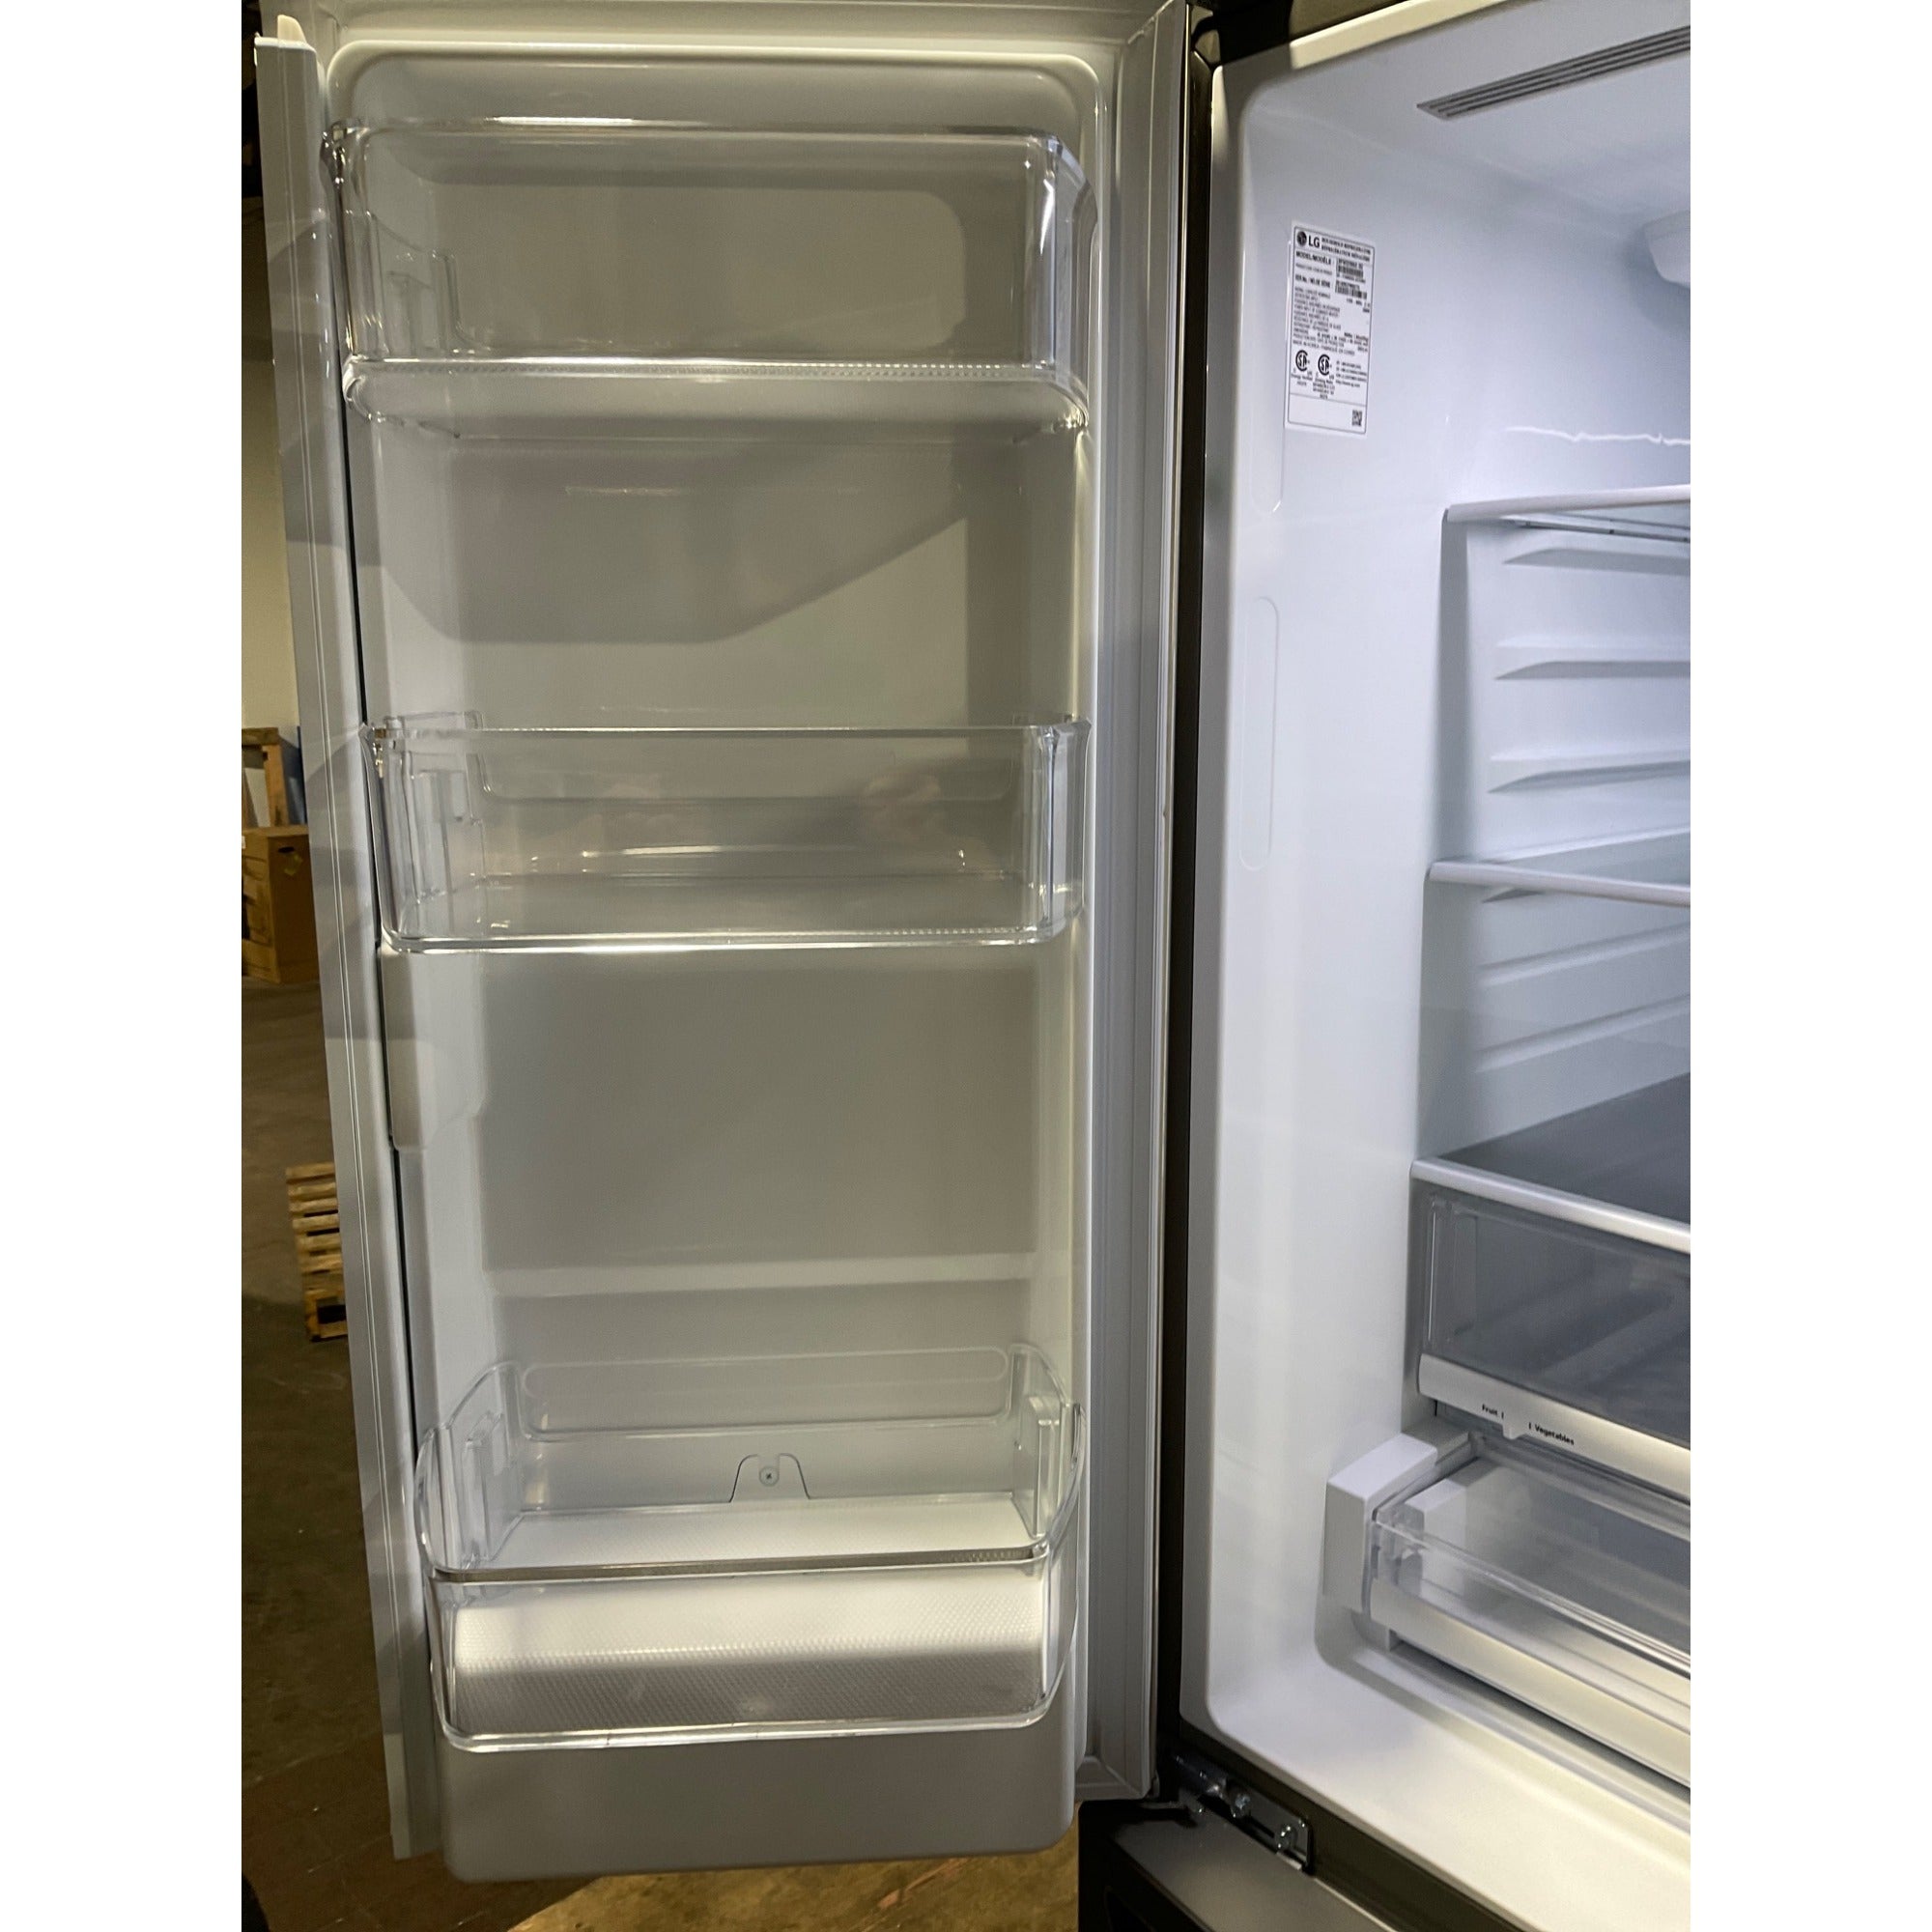 LG 29 cu ft. French Door Refrigerator with Slim Design Water Dispenser (LRFWS2902S)